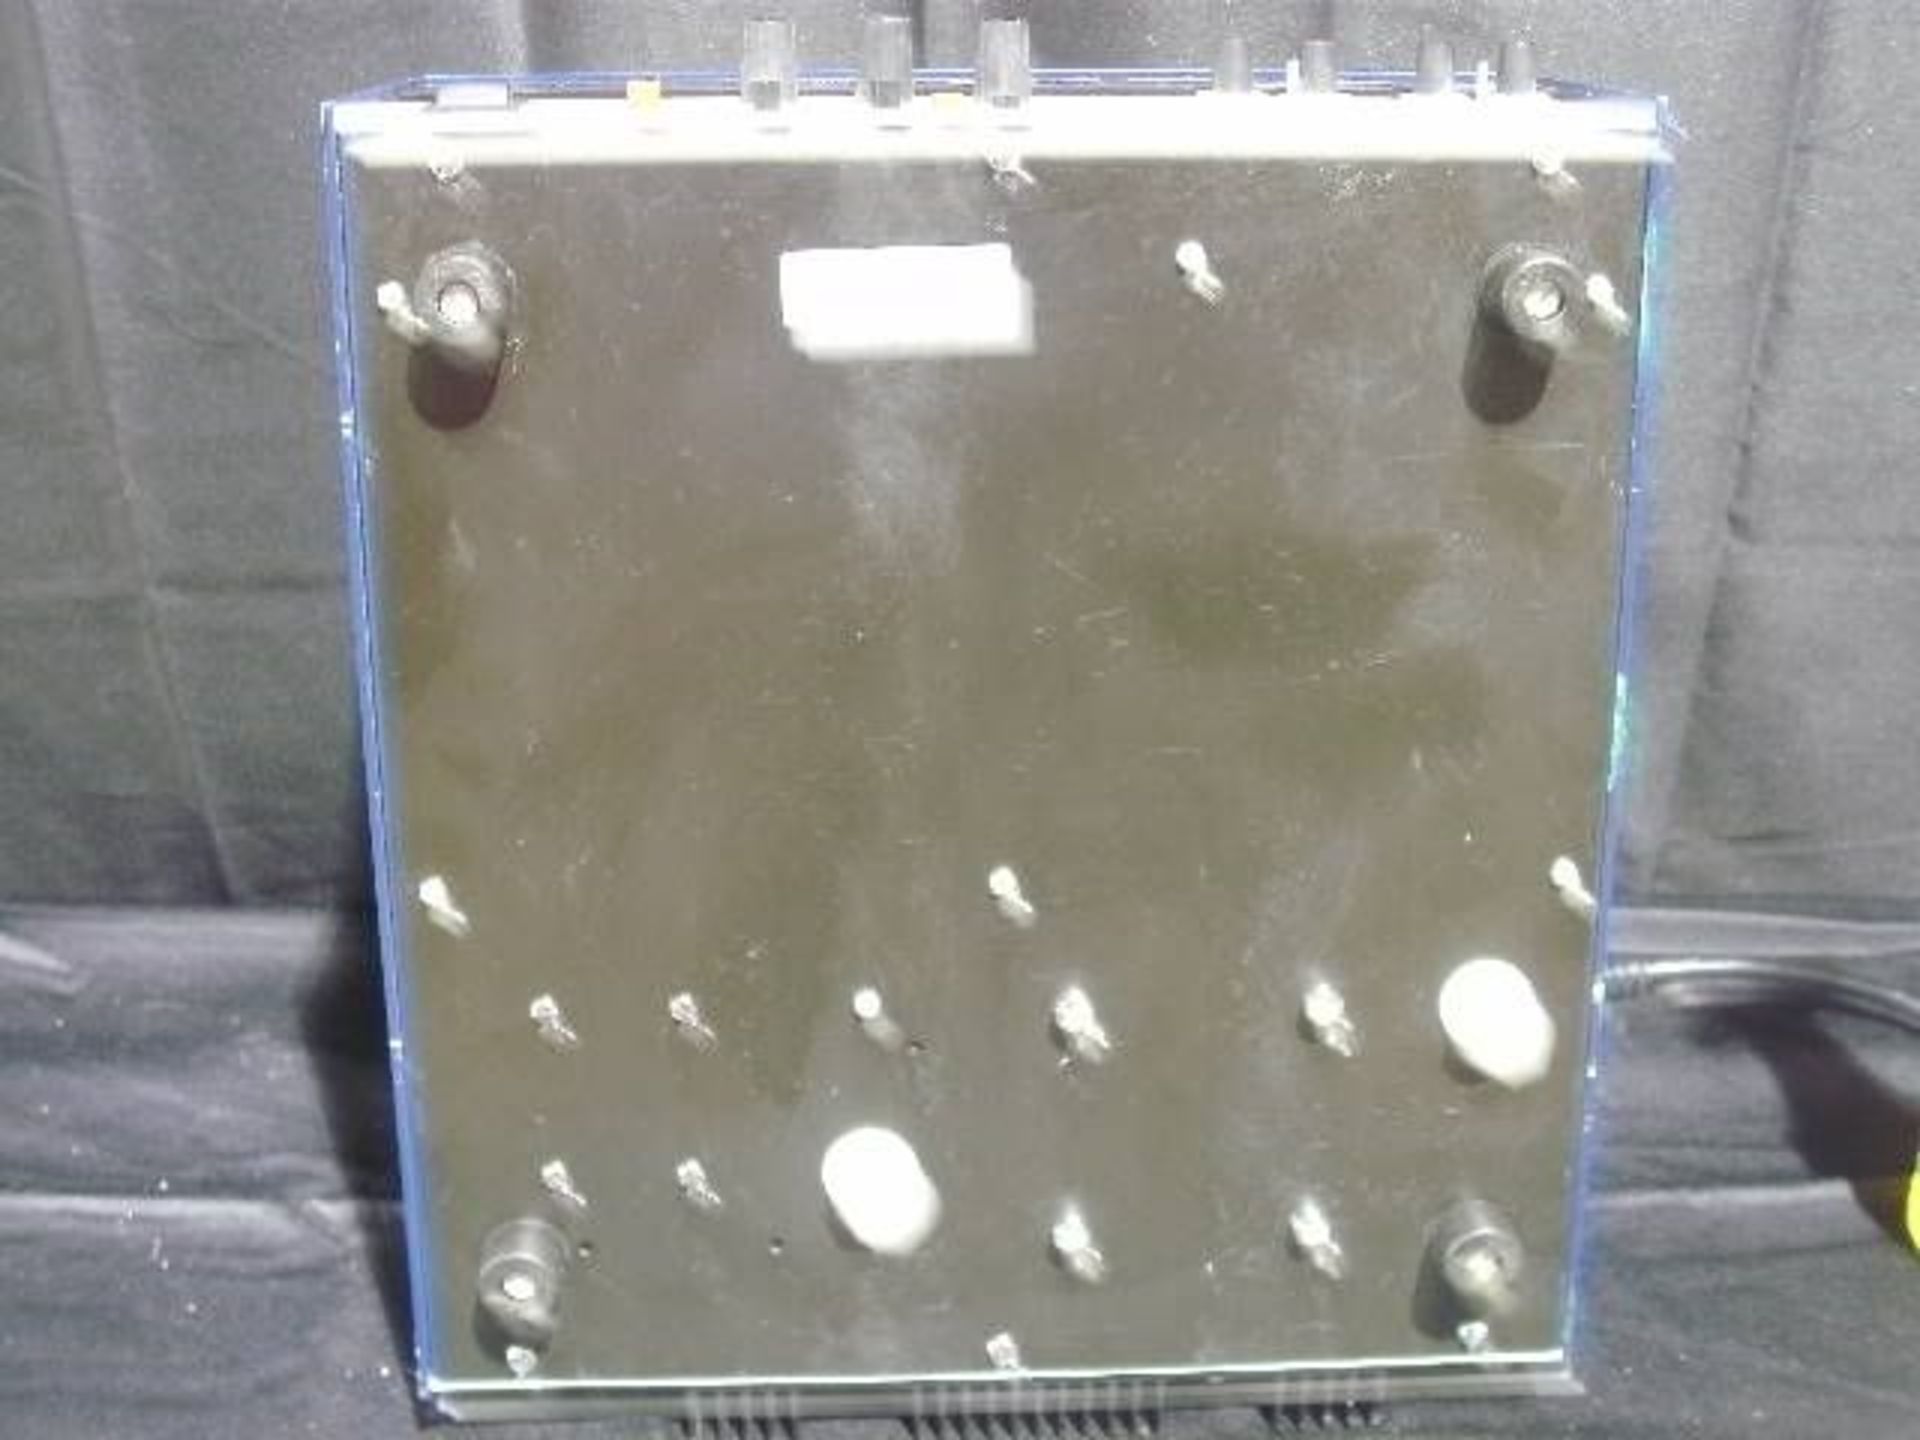 LKB/ BROMMA Power Supply Model 2197 Electrophoresis DC, Qty 1, 220889259758 - Image 4 of 5